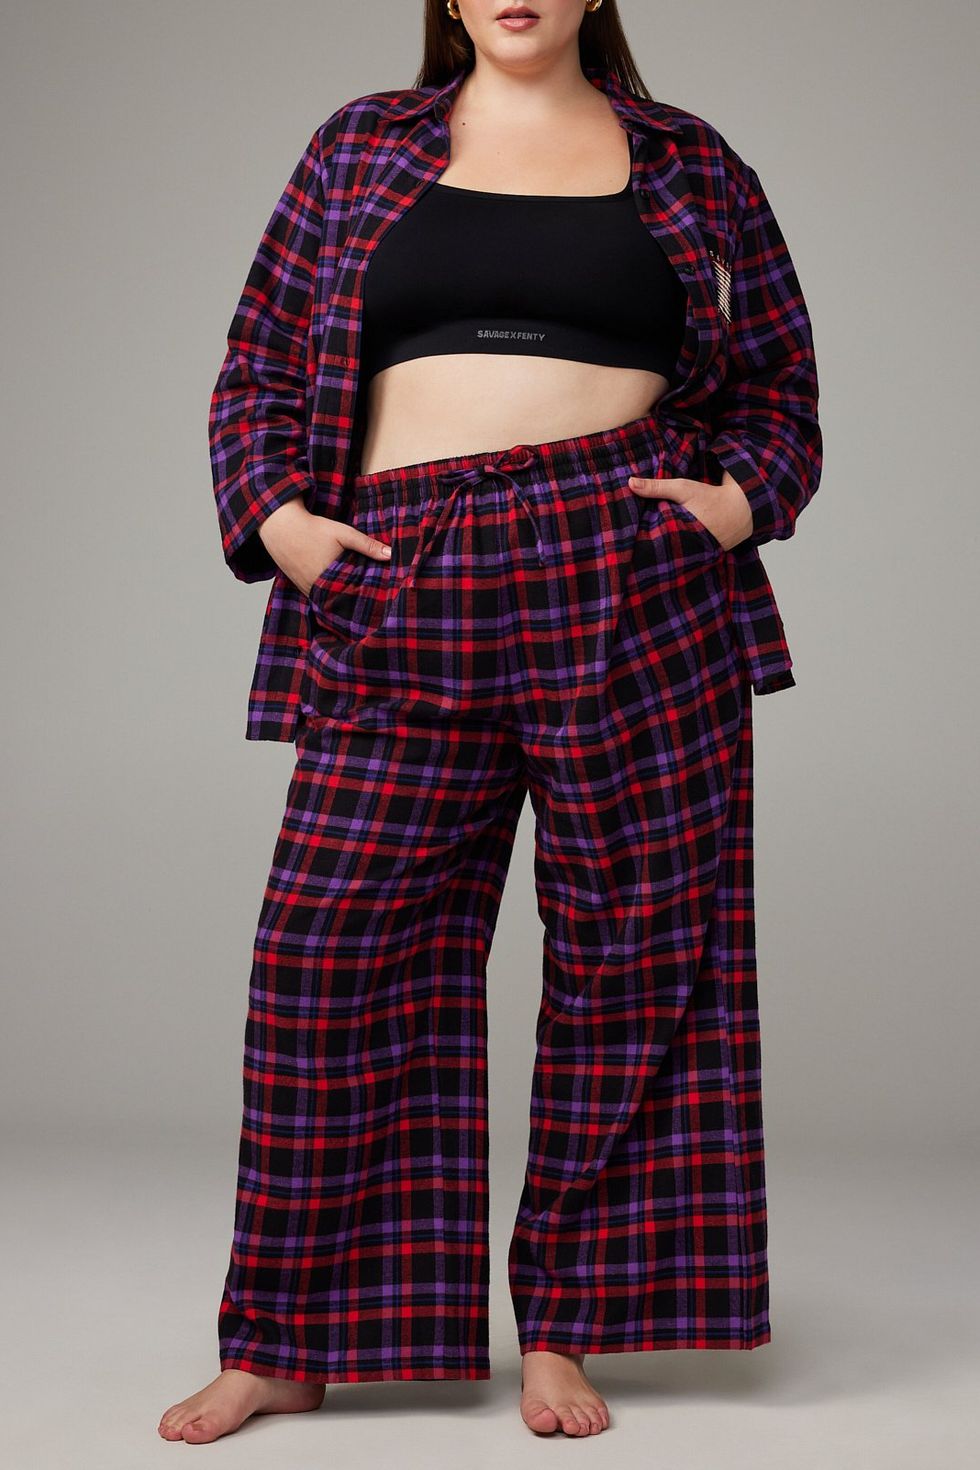 Pants and Black Crop Top PJ Pajama Set